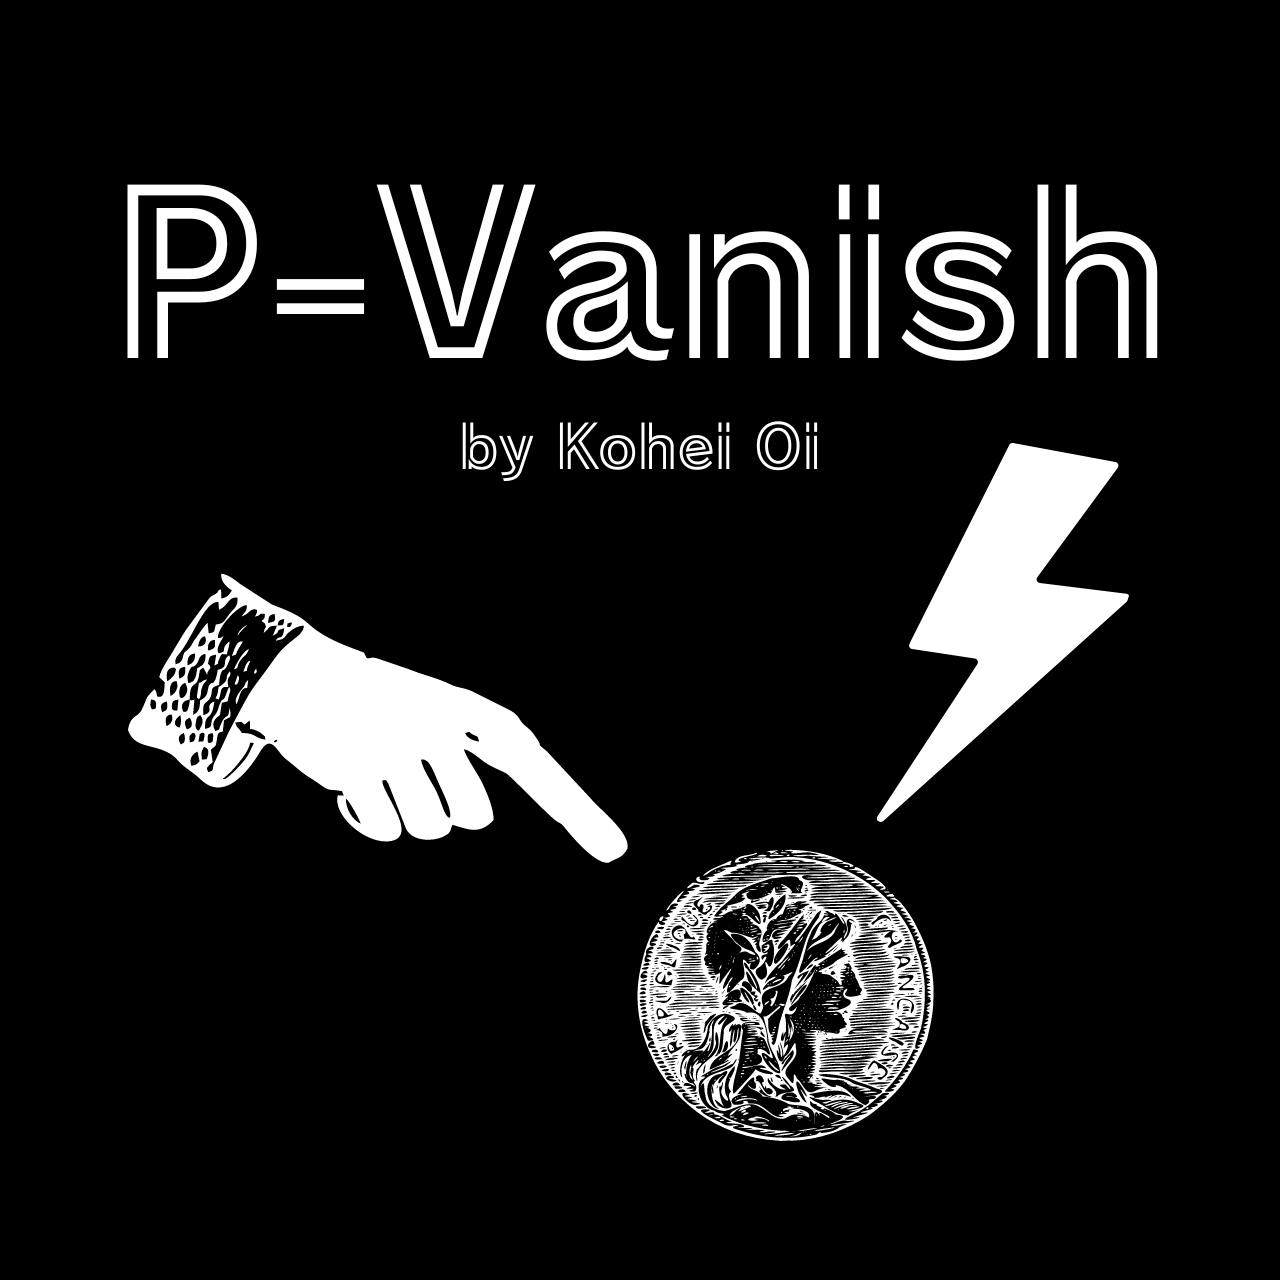 P-Vanish by Kohei Oi (Mp4 Video Magic Download)